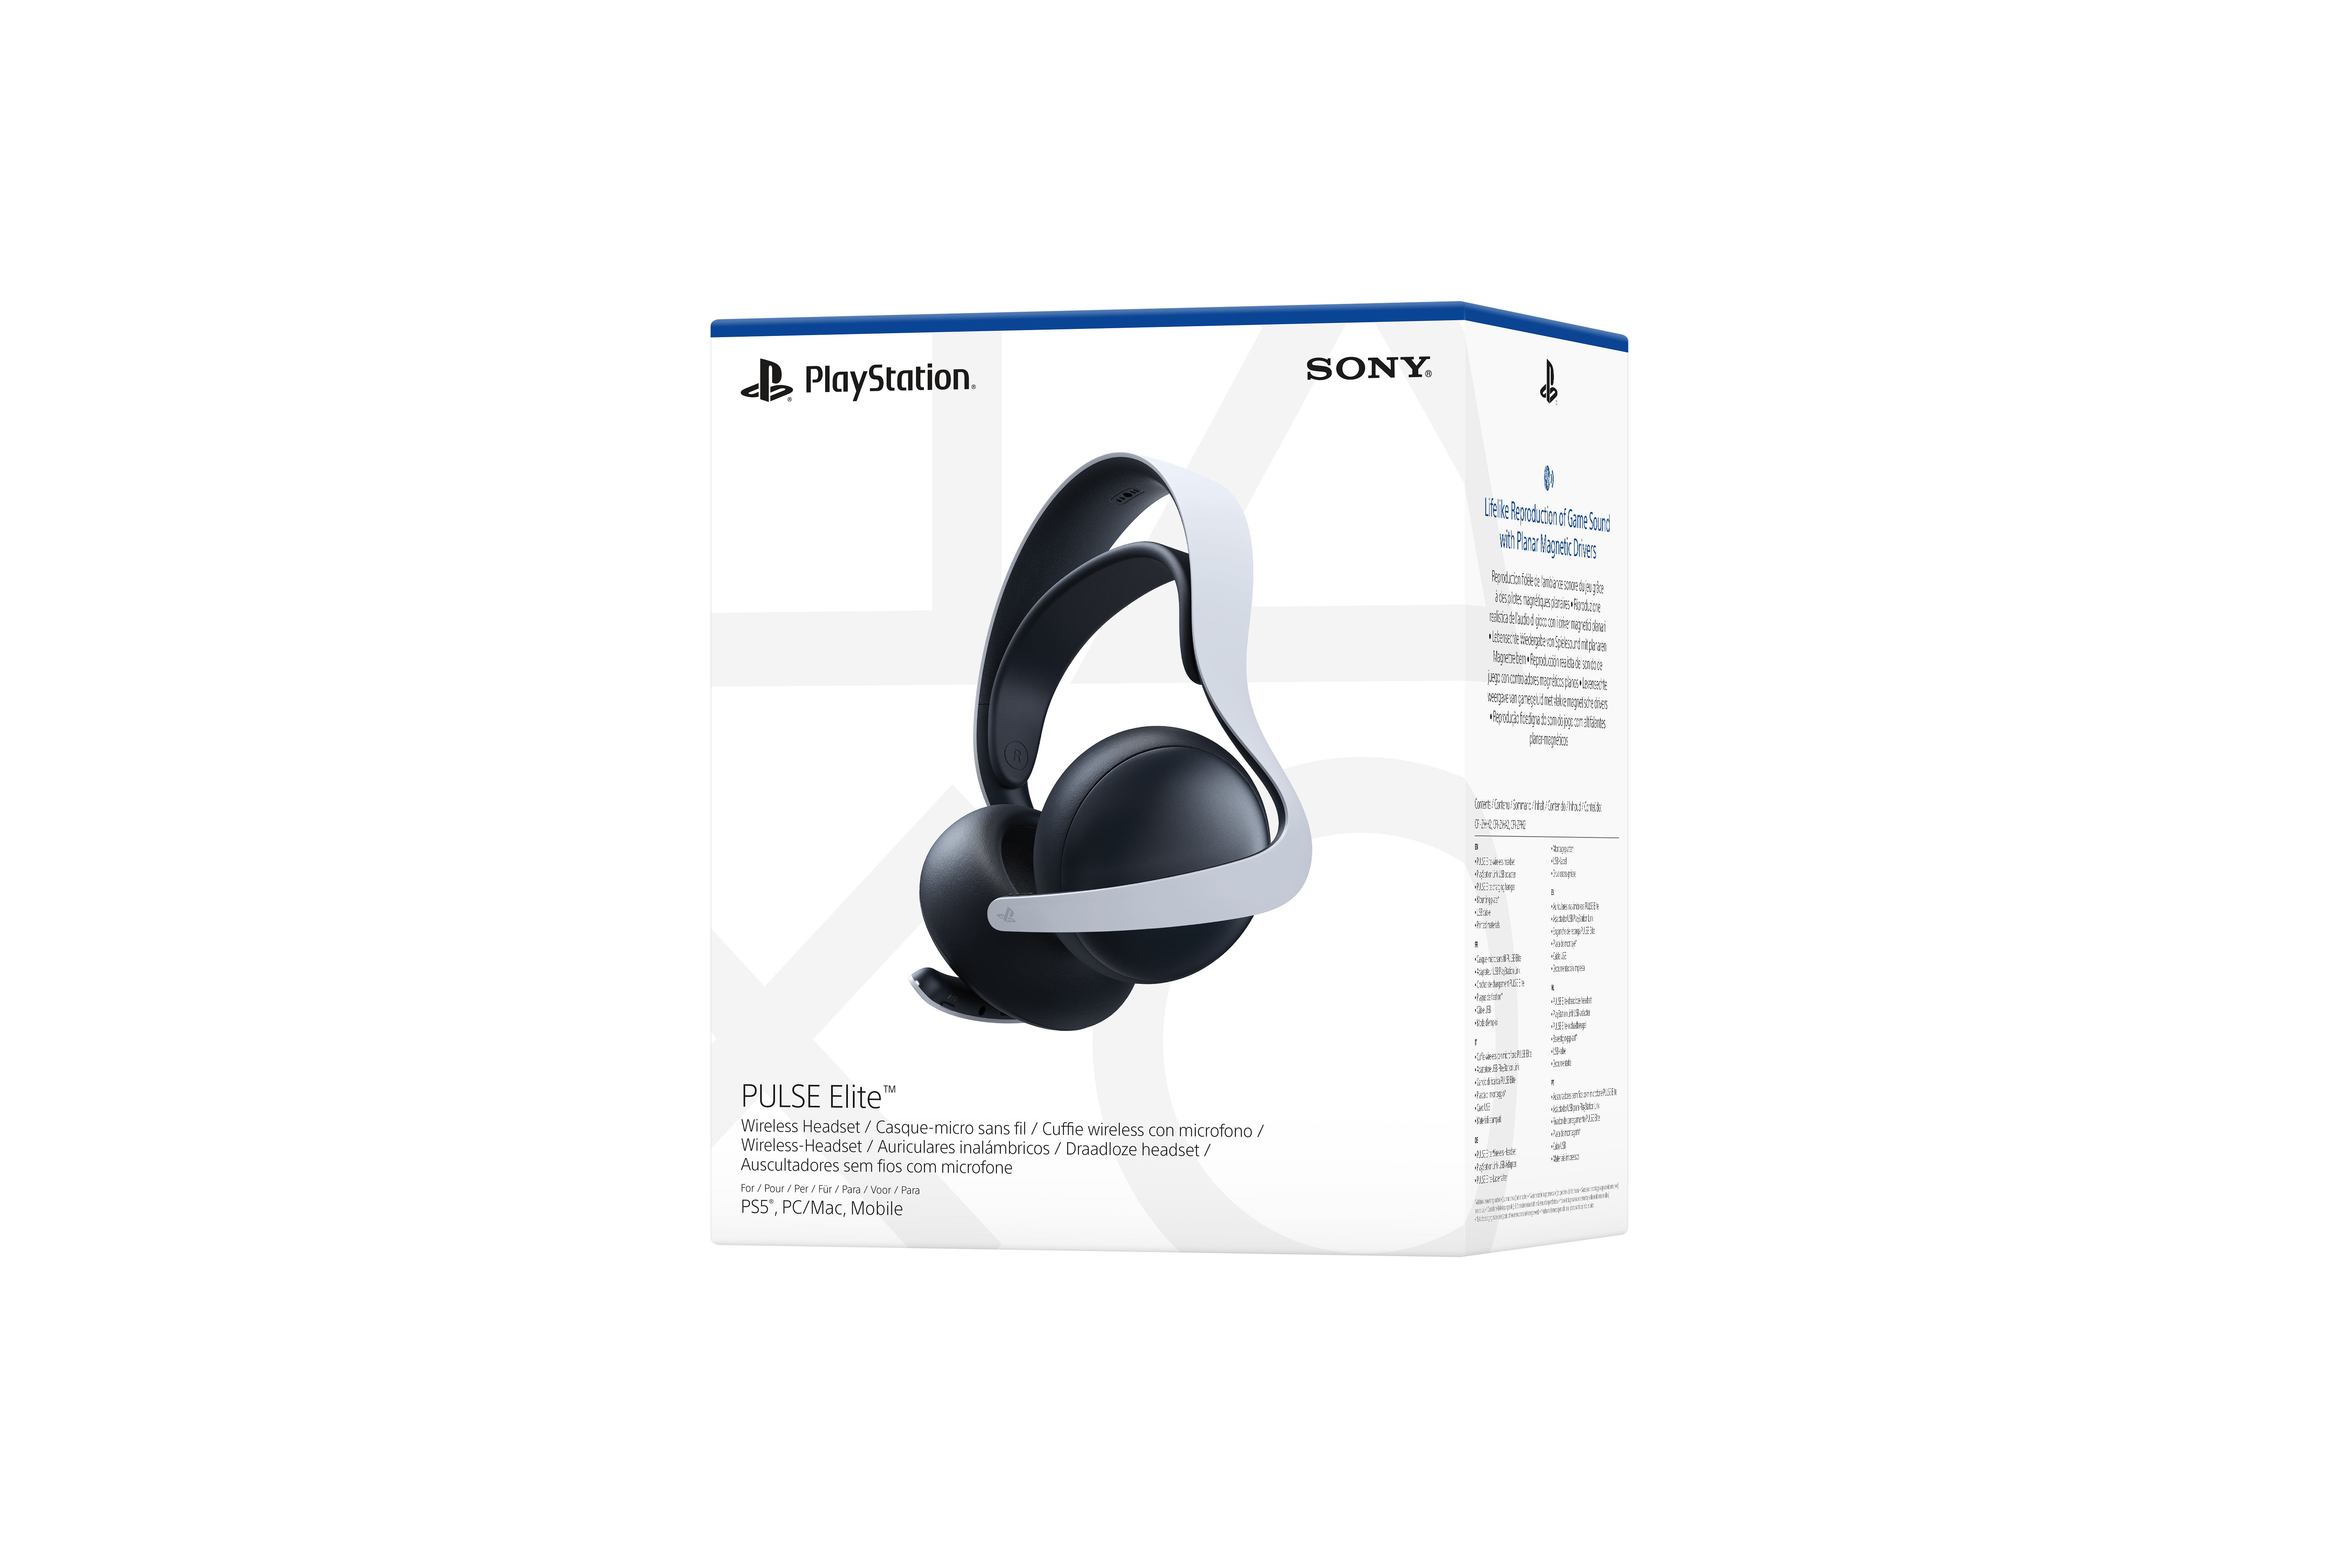 Sony Playstation 5 PULSE Elite wireless headset